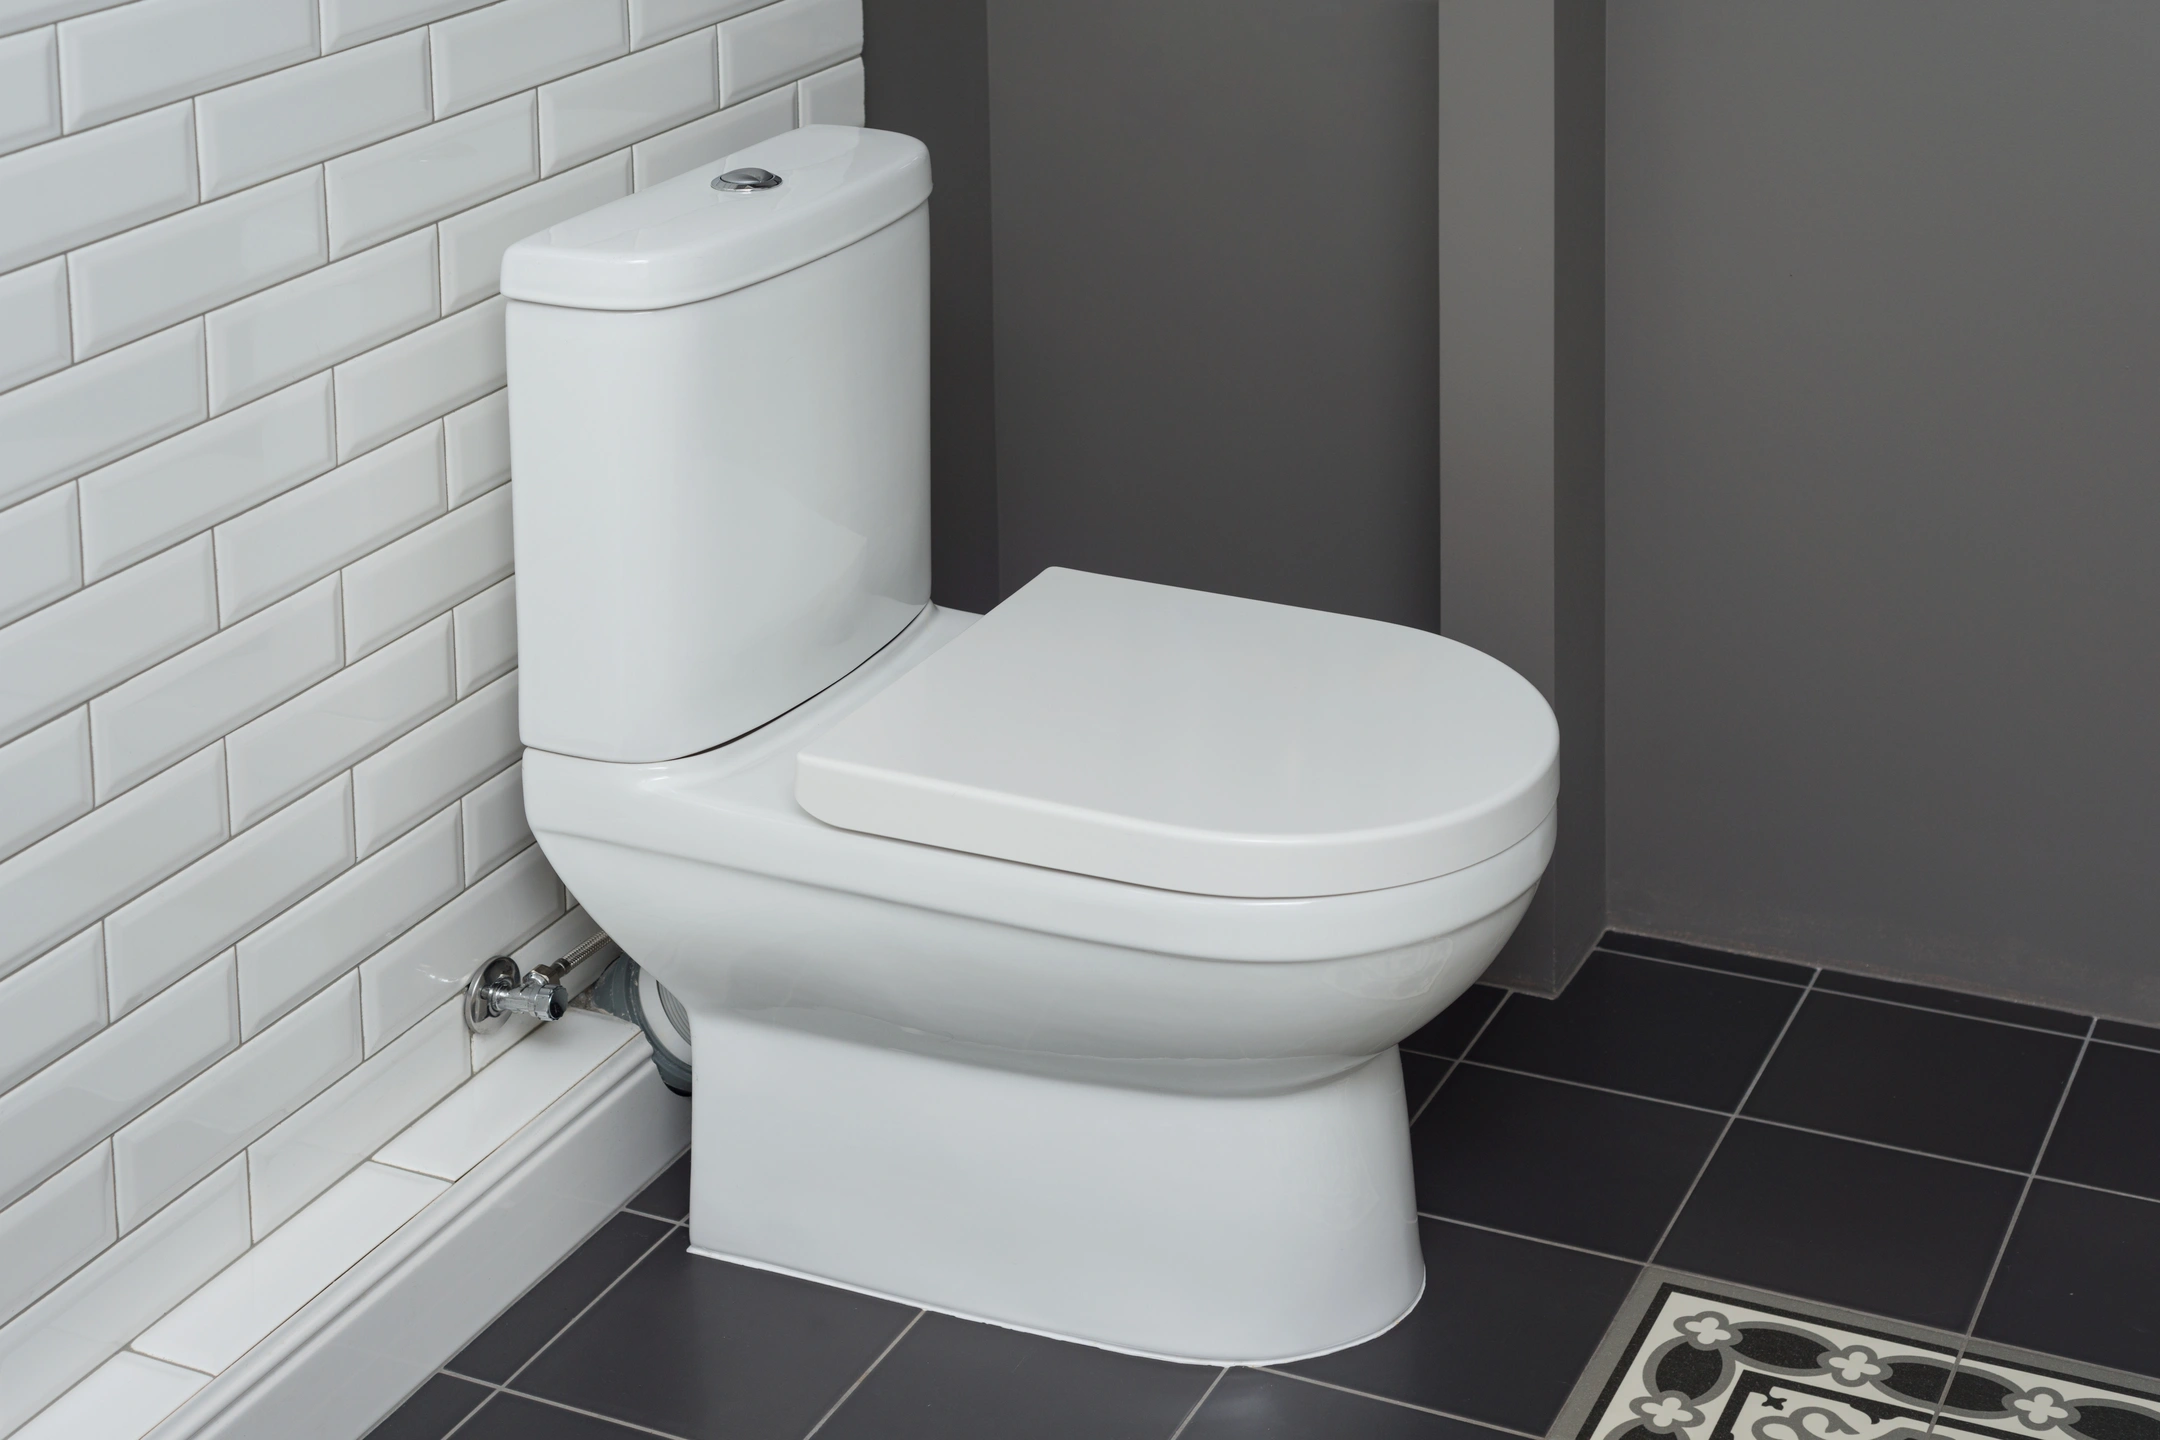 new kohler toilets with button flush feature